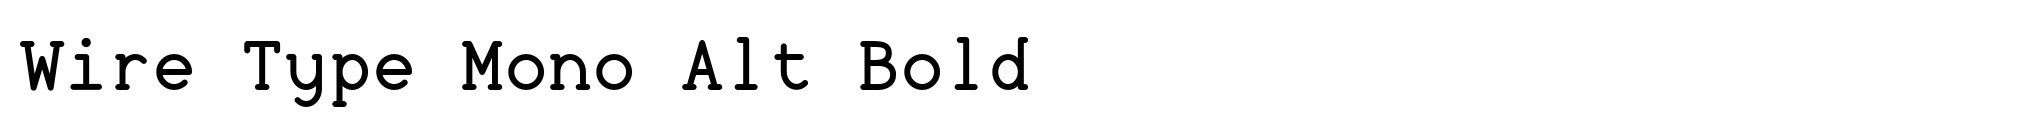 Wire Type Mono Alt Bold image